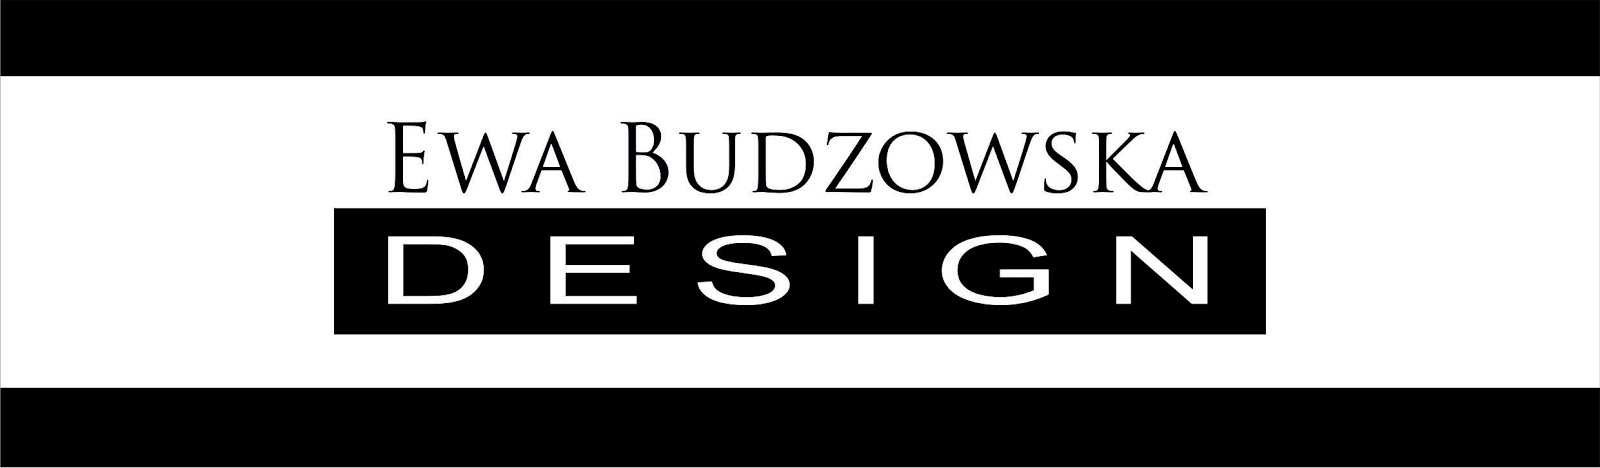 Ewa Budzowska Design